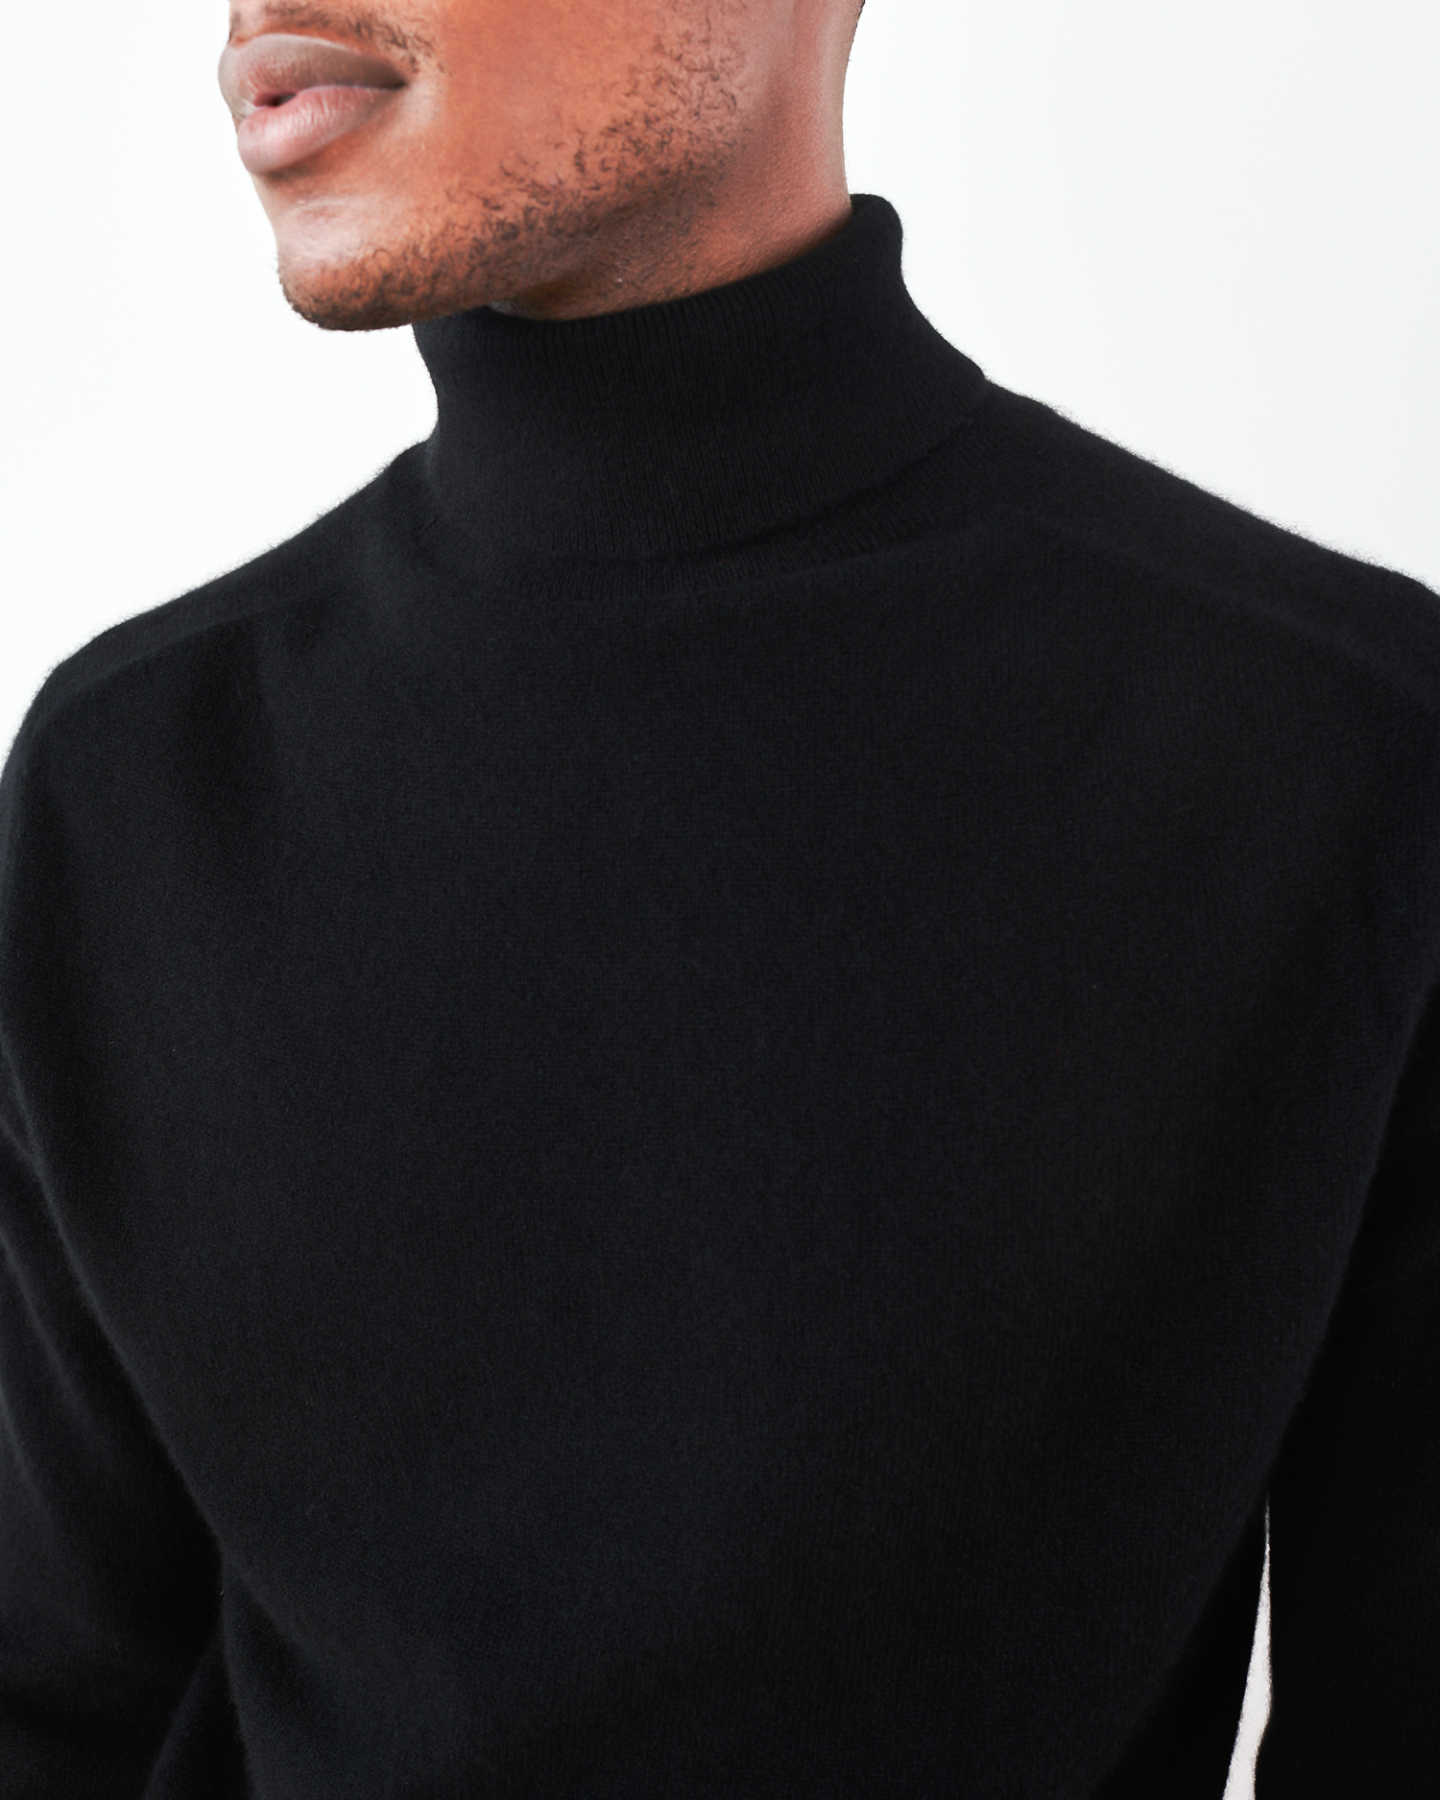 Man wearing men's black cashmere turtleneck sweater zoomed